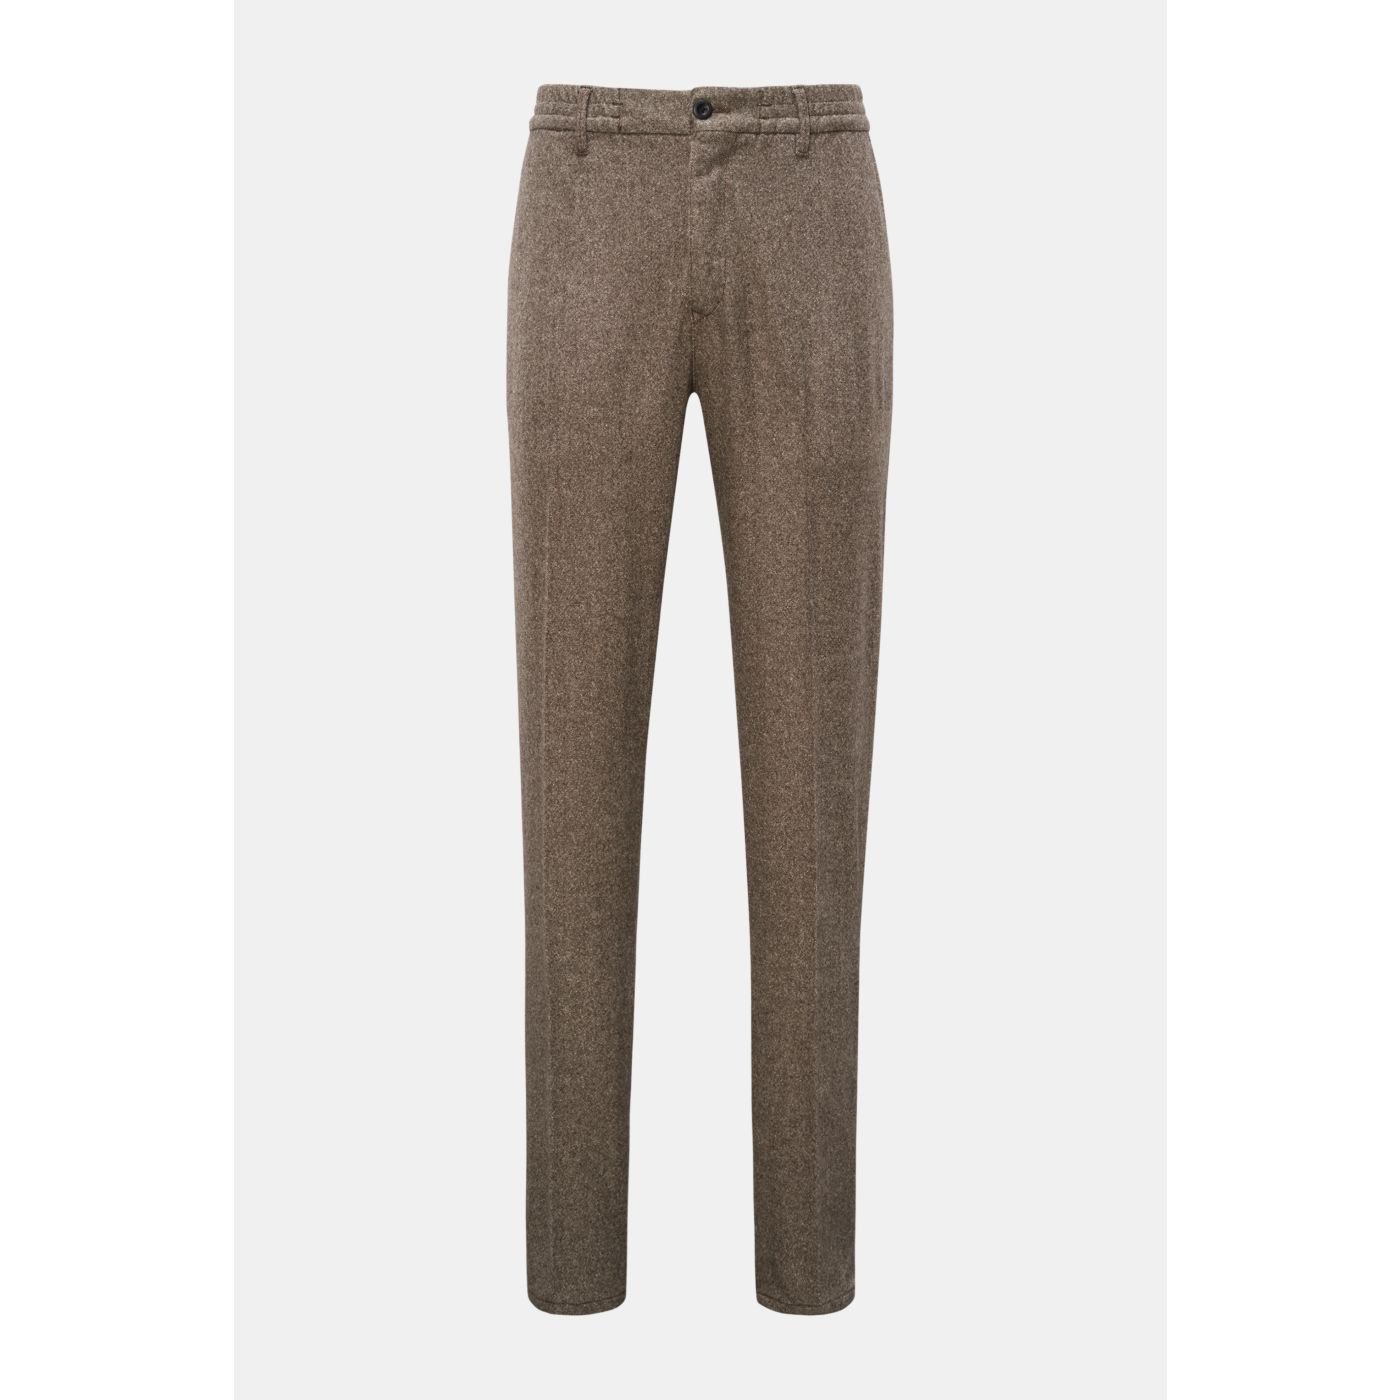 SLACKS Hamburg grey-brown INCOTEX jogger BRAUN | pants flannel